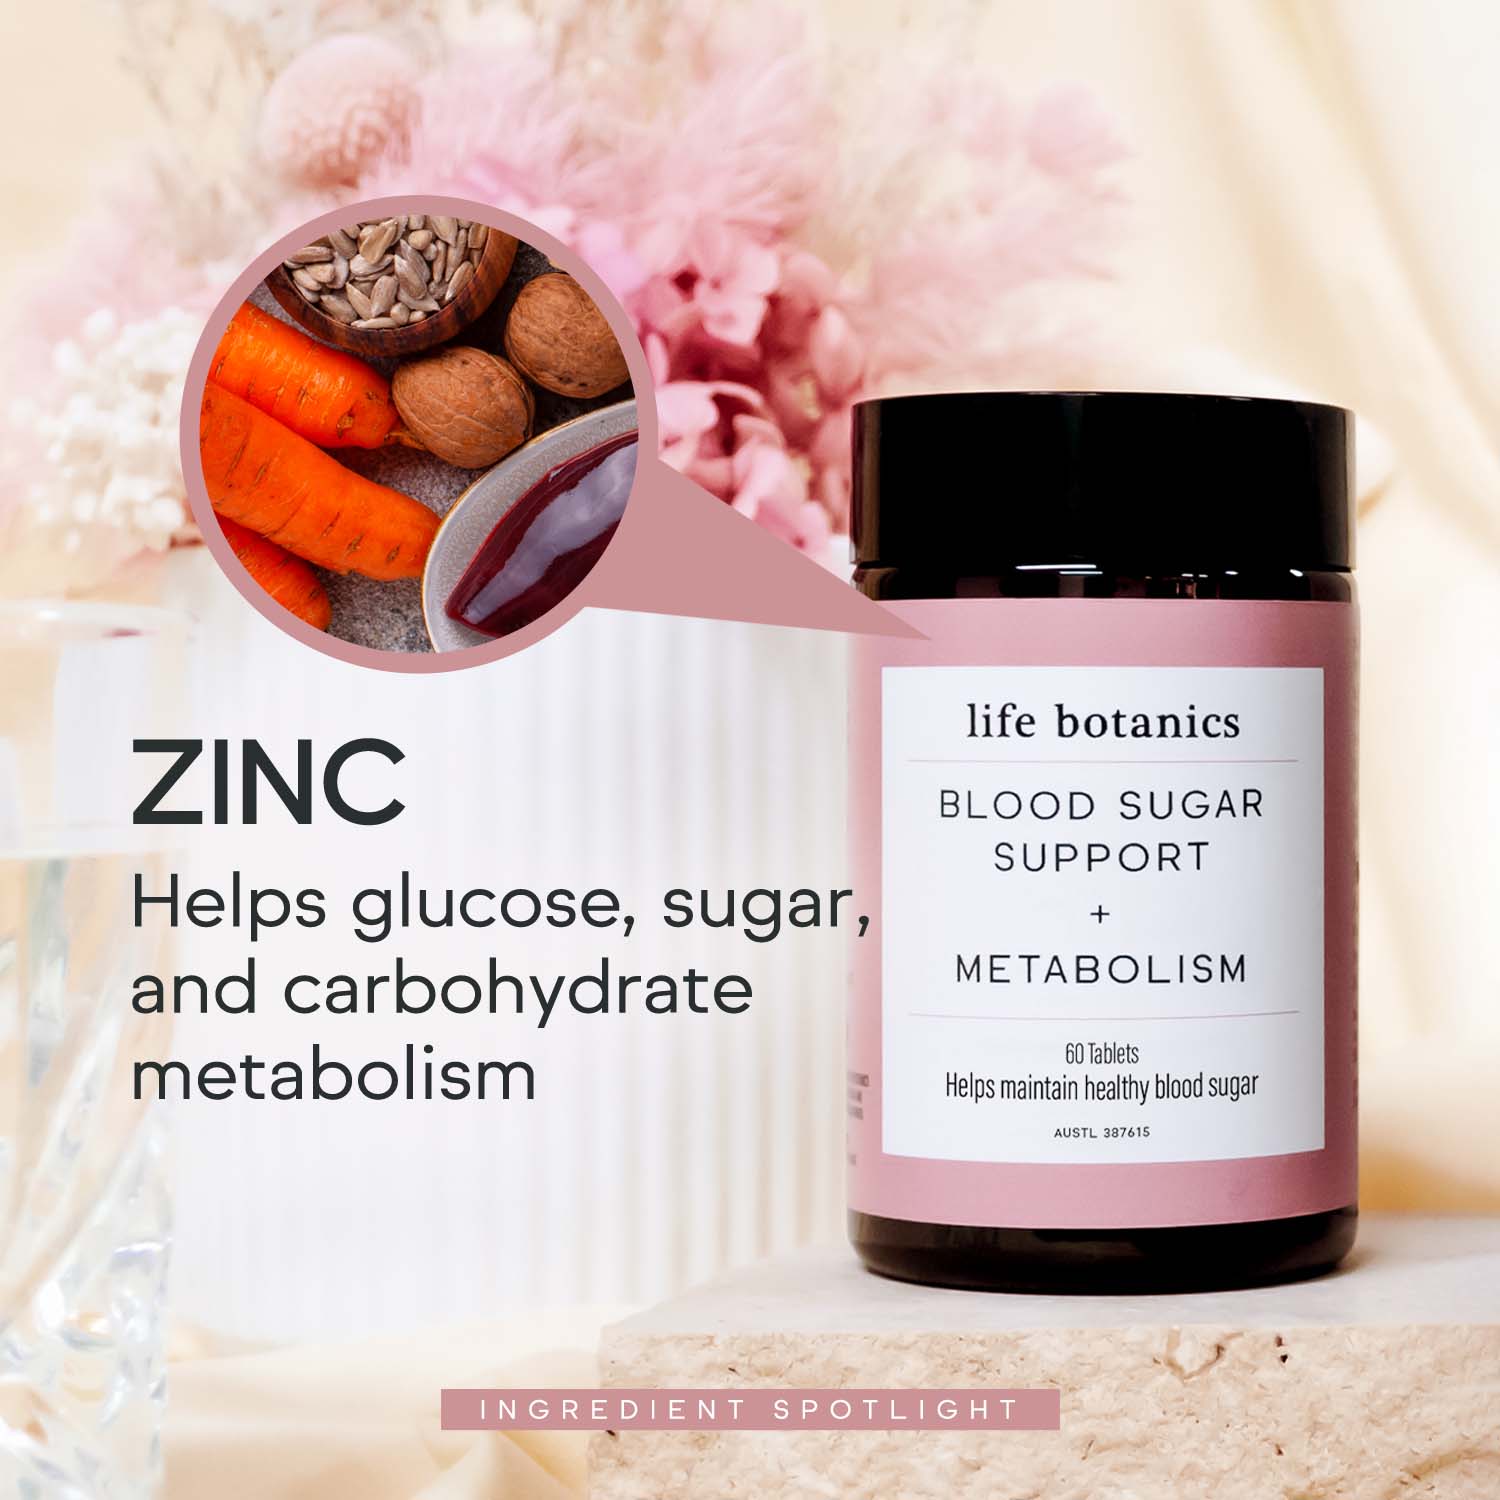 life botanics Blood Sugar Support + Metabolism Zinc 180